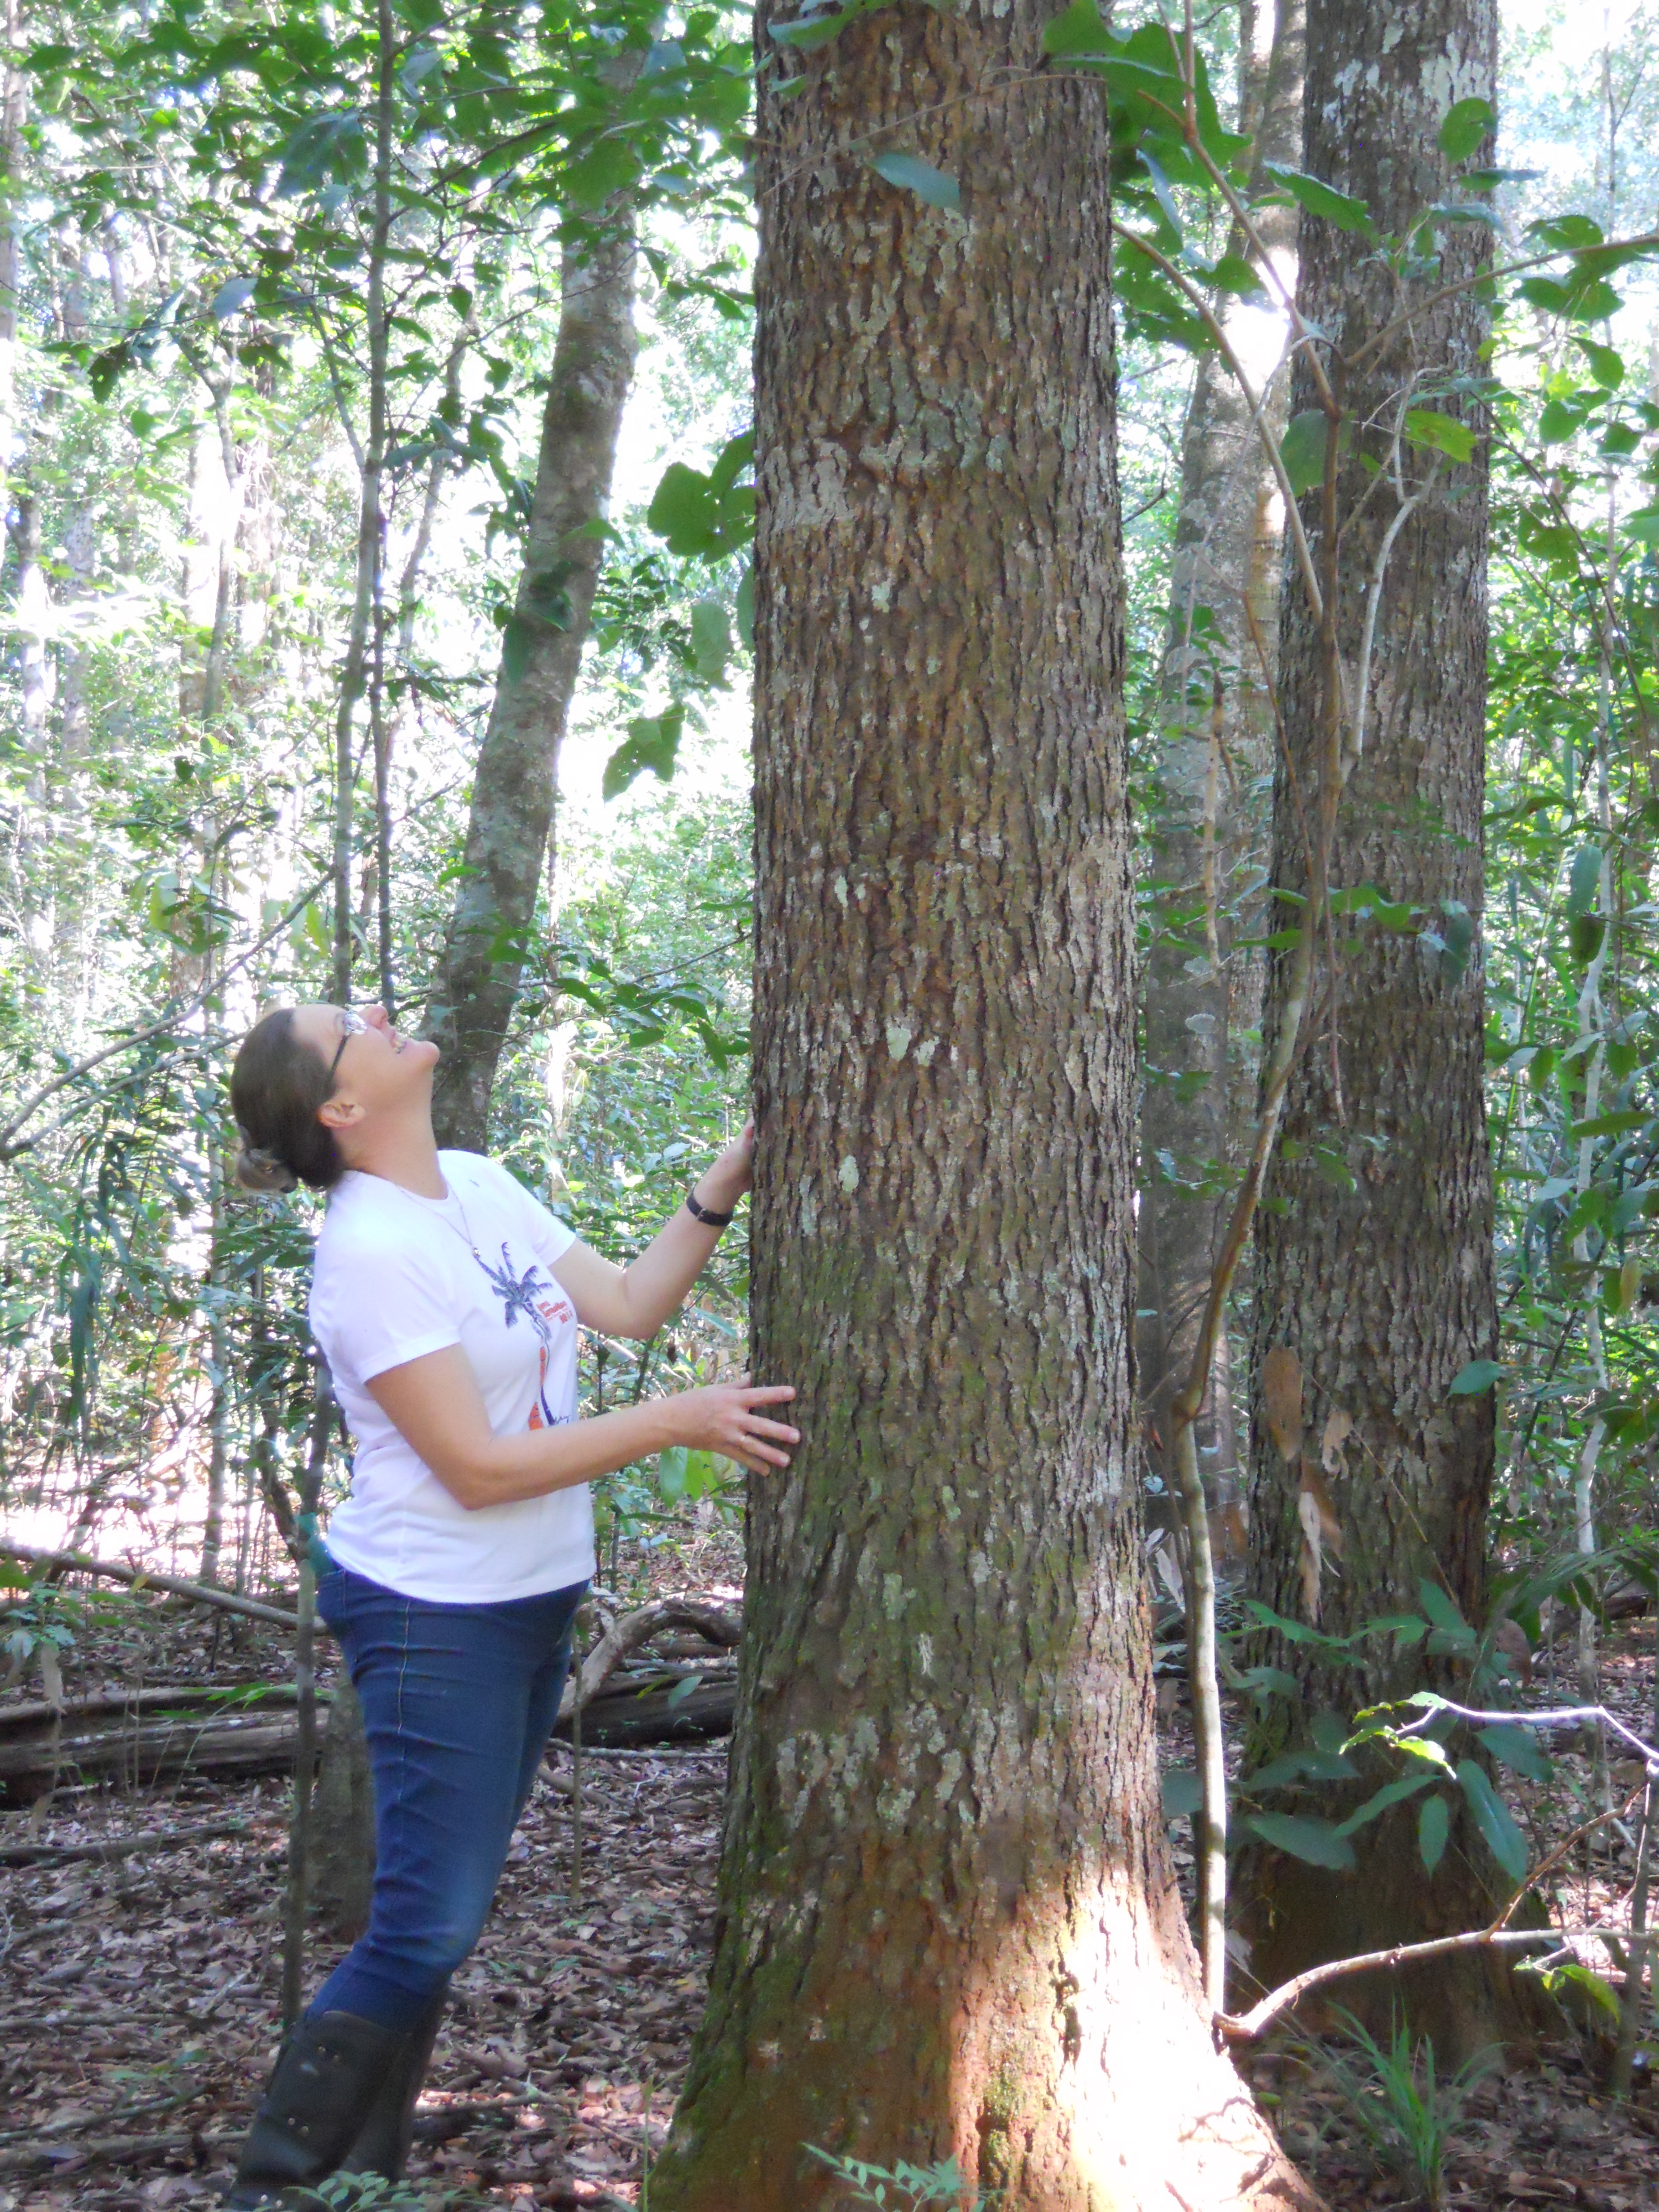 Professor Beatriz Marimon of Brazil’s Mato Grosso State University admiring a tall ‘bloodwood’ tree (Brosimum rubescens) in the rainforest. 